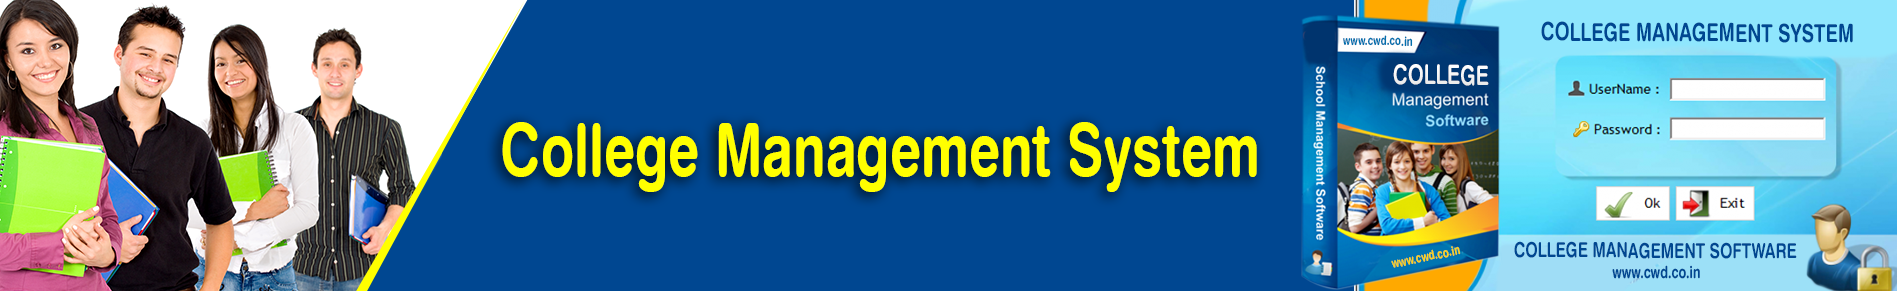 college management system in Chennai | online college management system in Chennai | college management software in Chennai